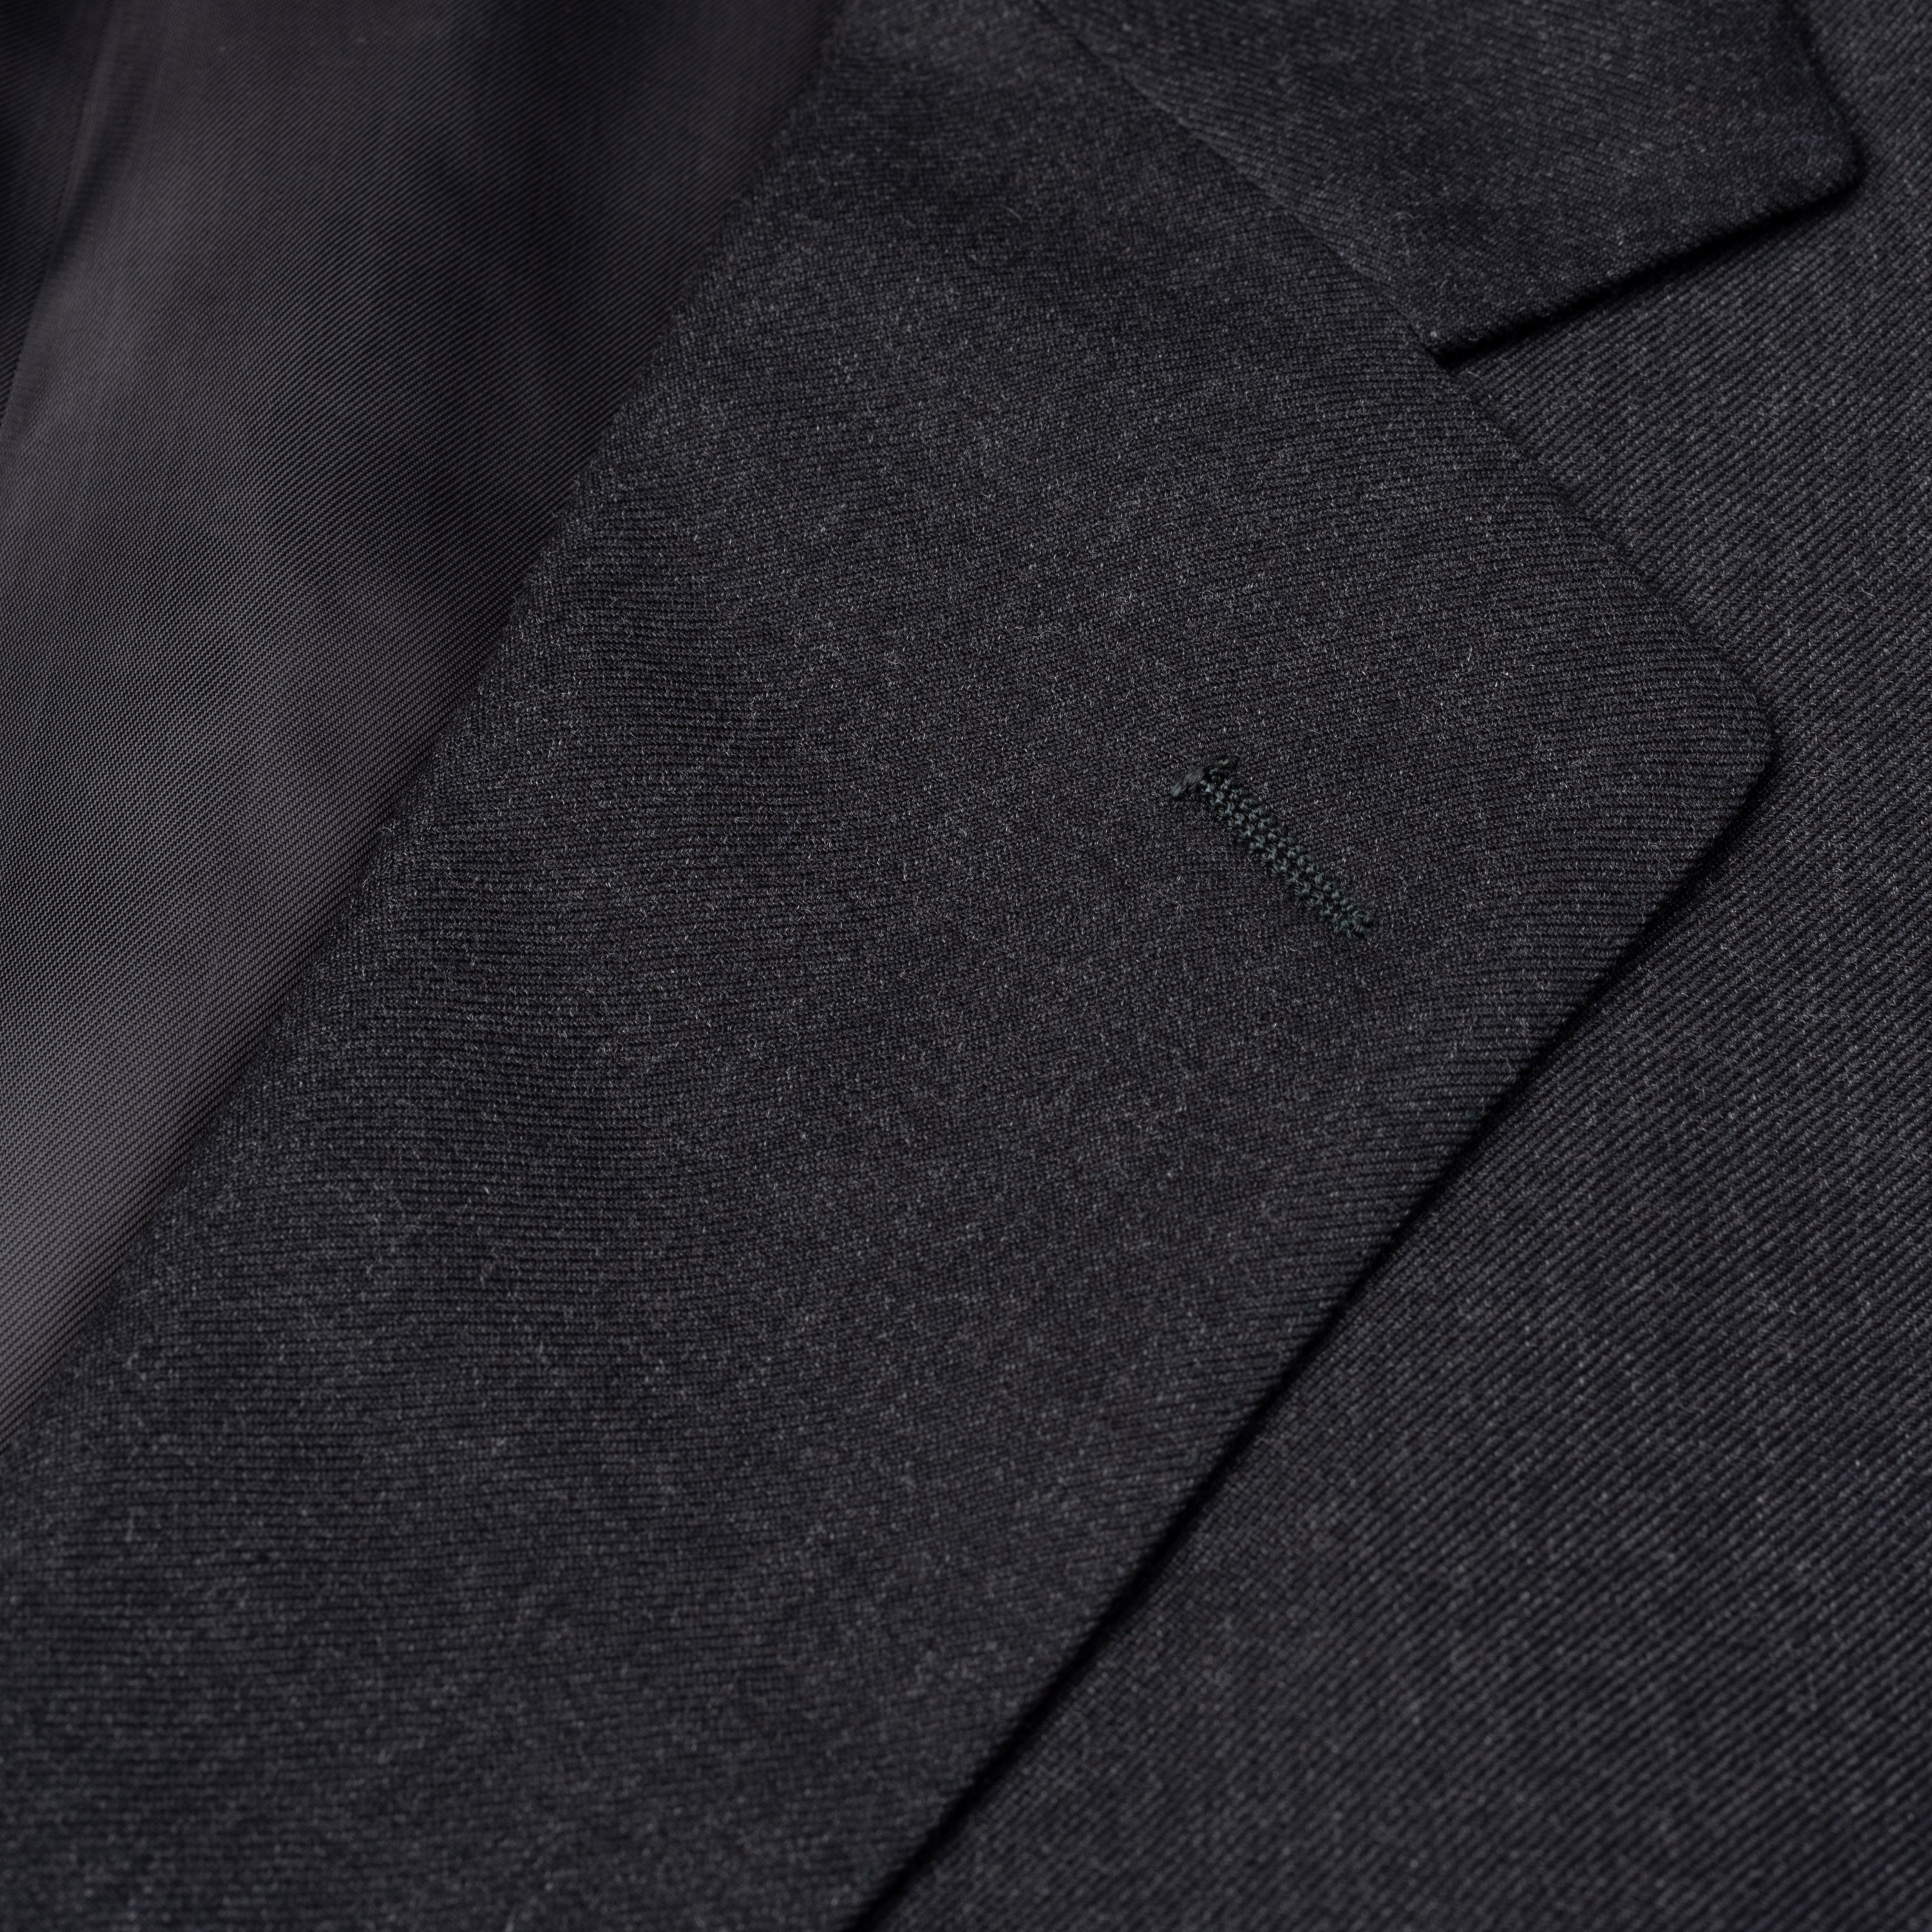 CASTANGIA 1850 Dark Gray Wool Sport Coat Jacket EU 54 NEW US 44 CASTANGIA